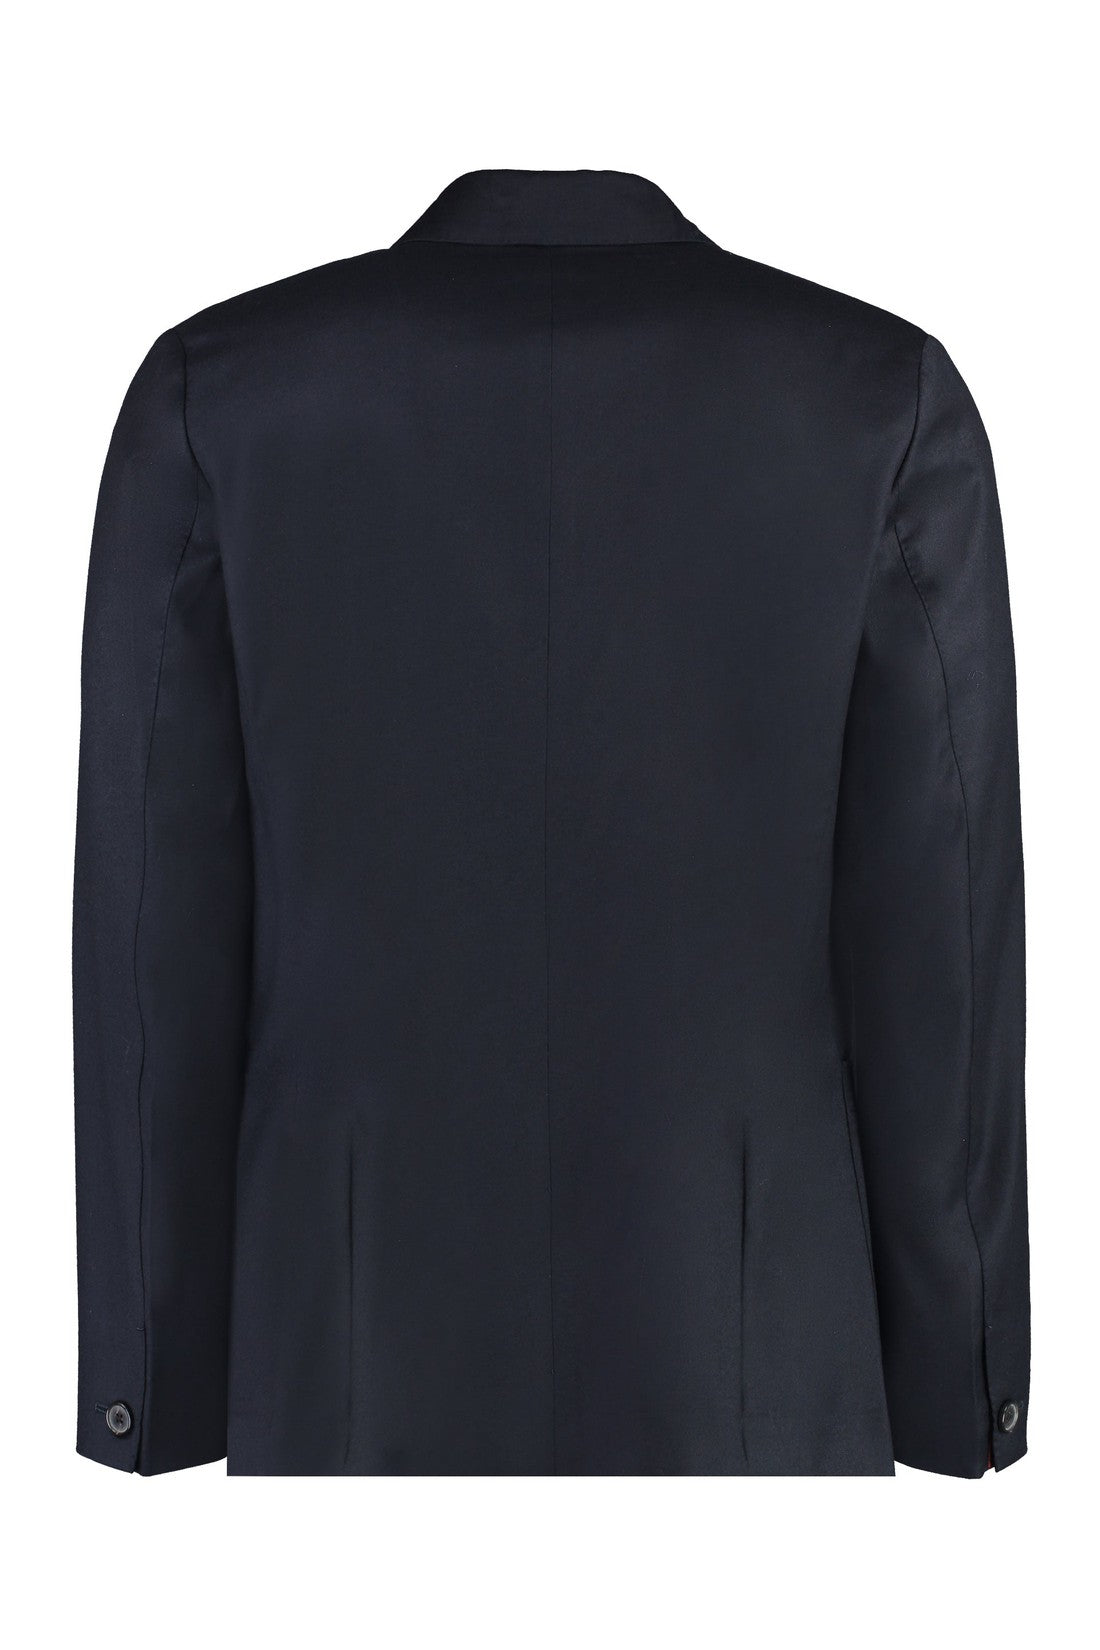 Paul Smith-OUTLET-SALE-Wool-cashmere blend two-button blazer-ARCHIVIST